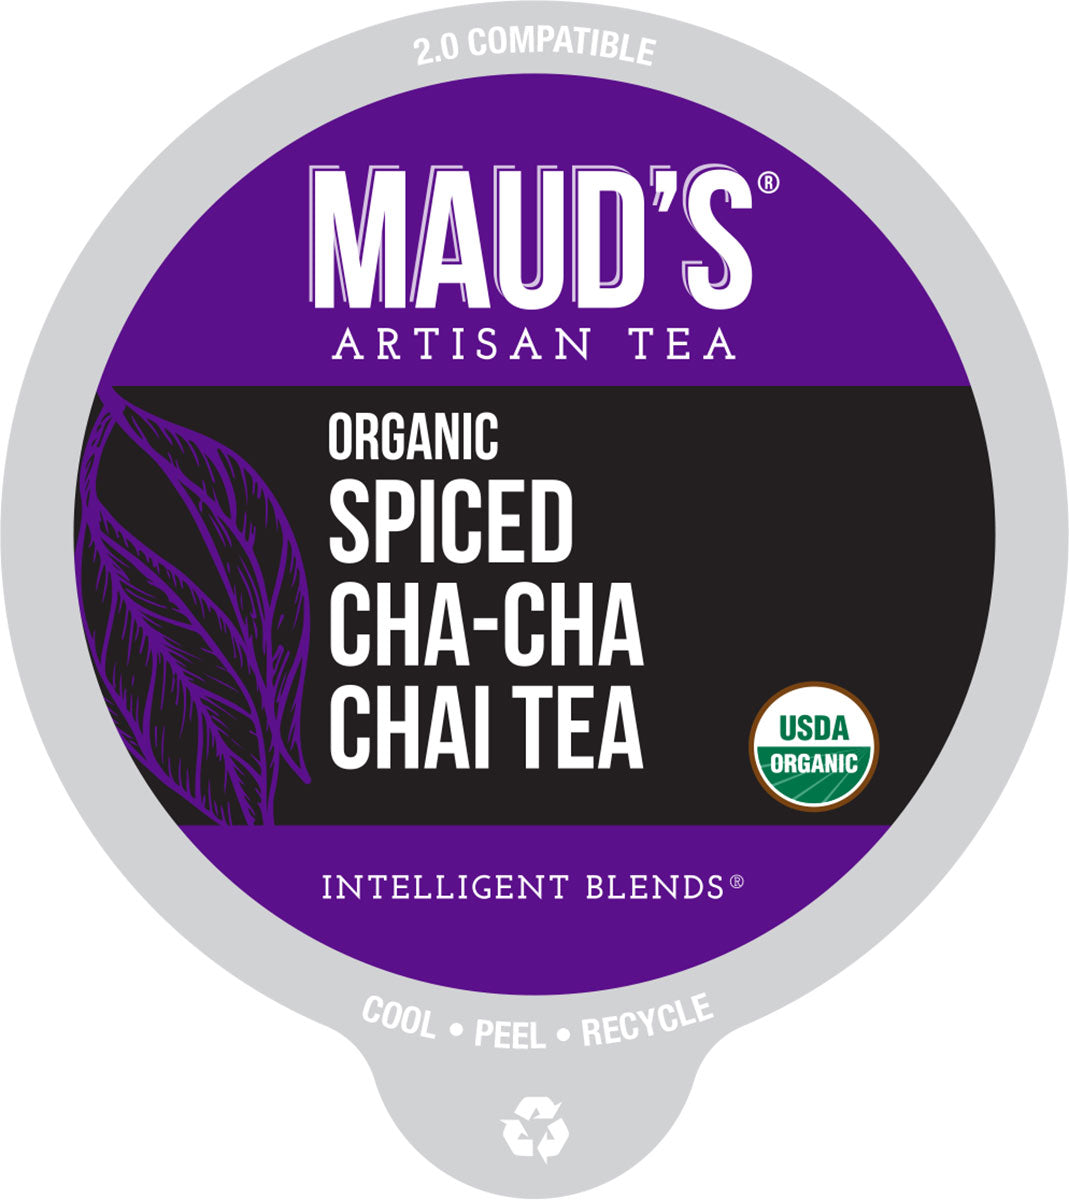 Organic English Breakfast Tea, Buddha Teas